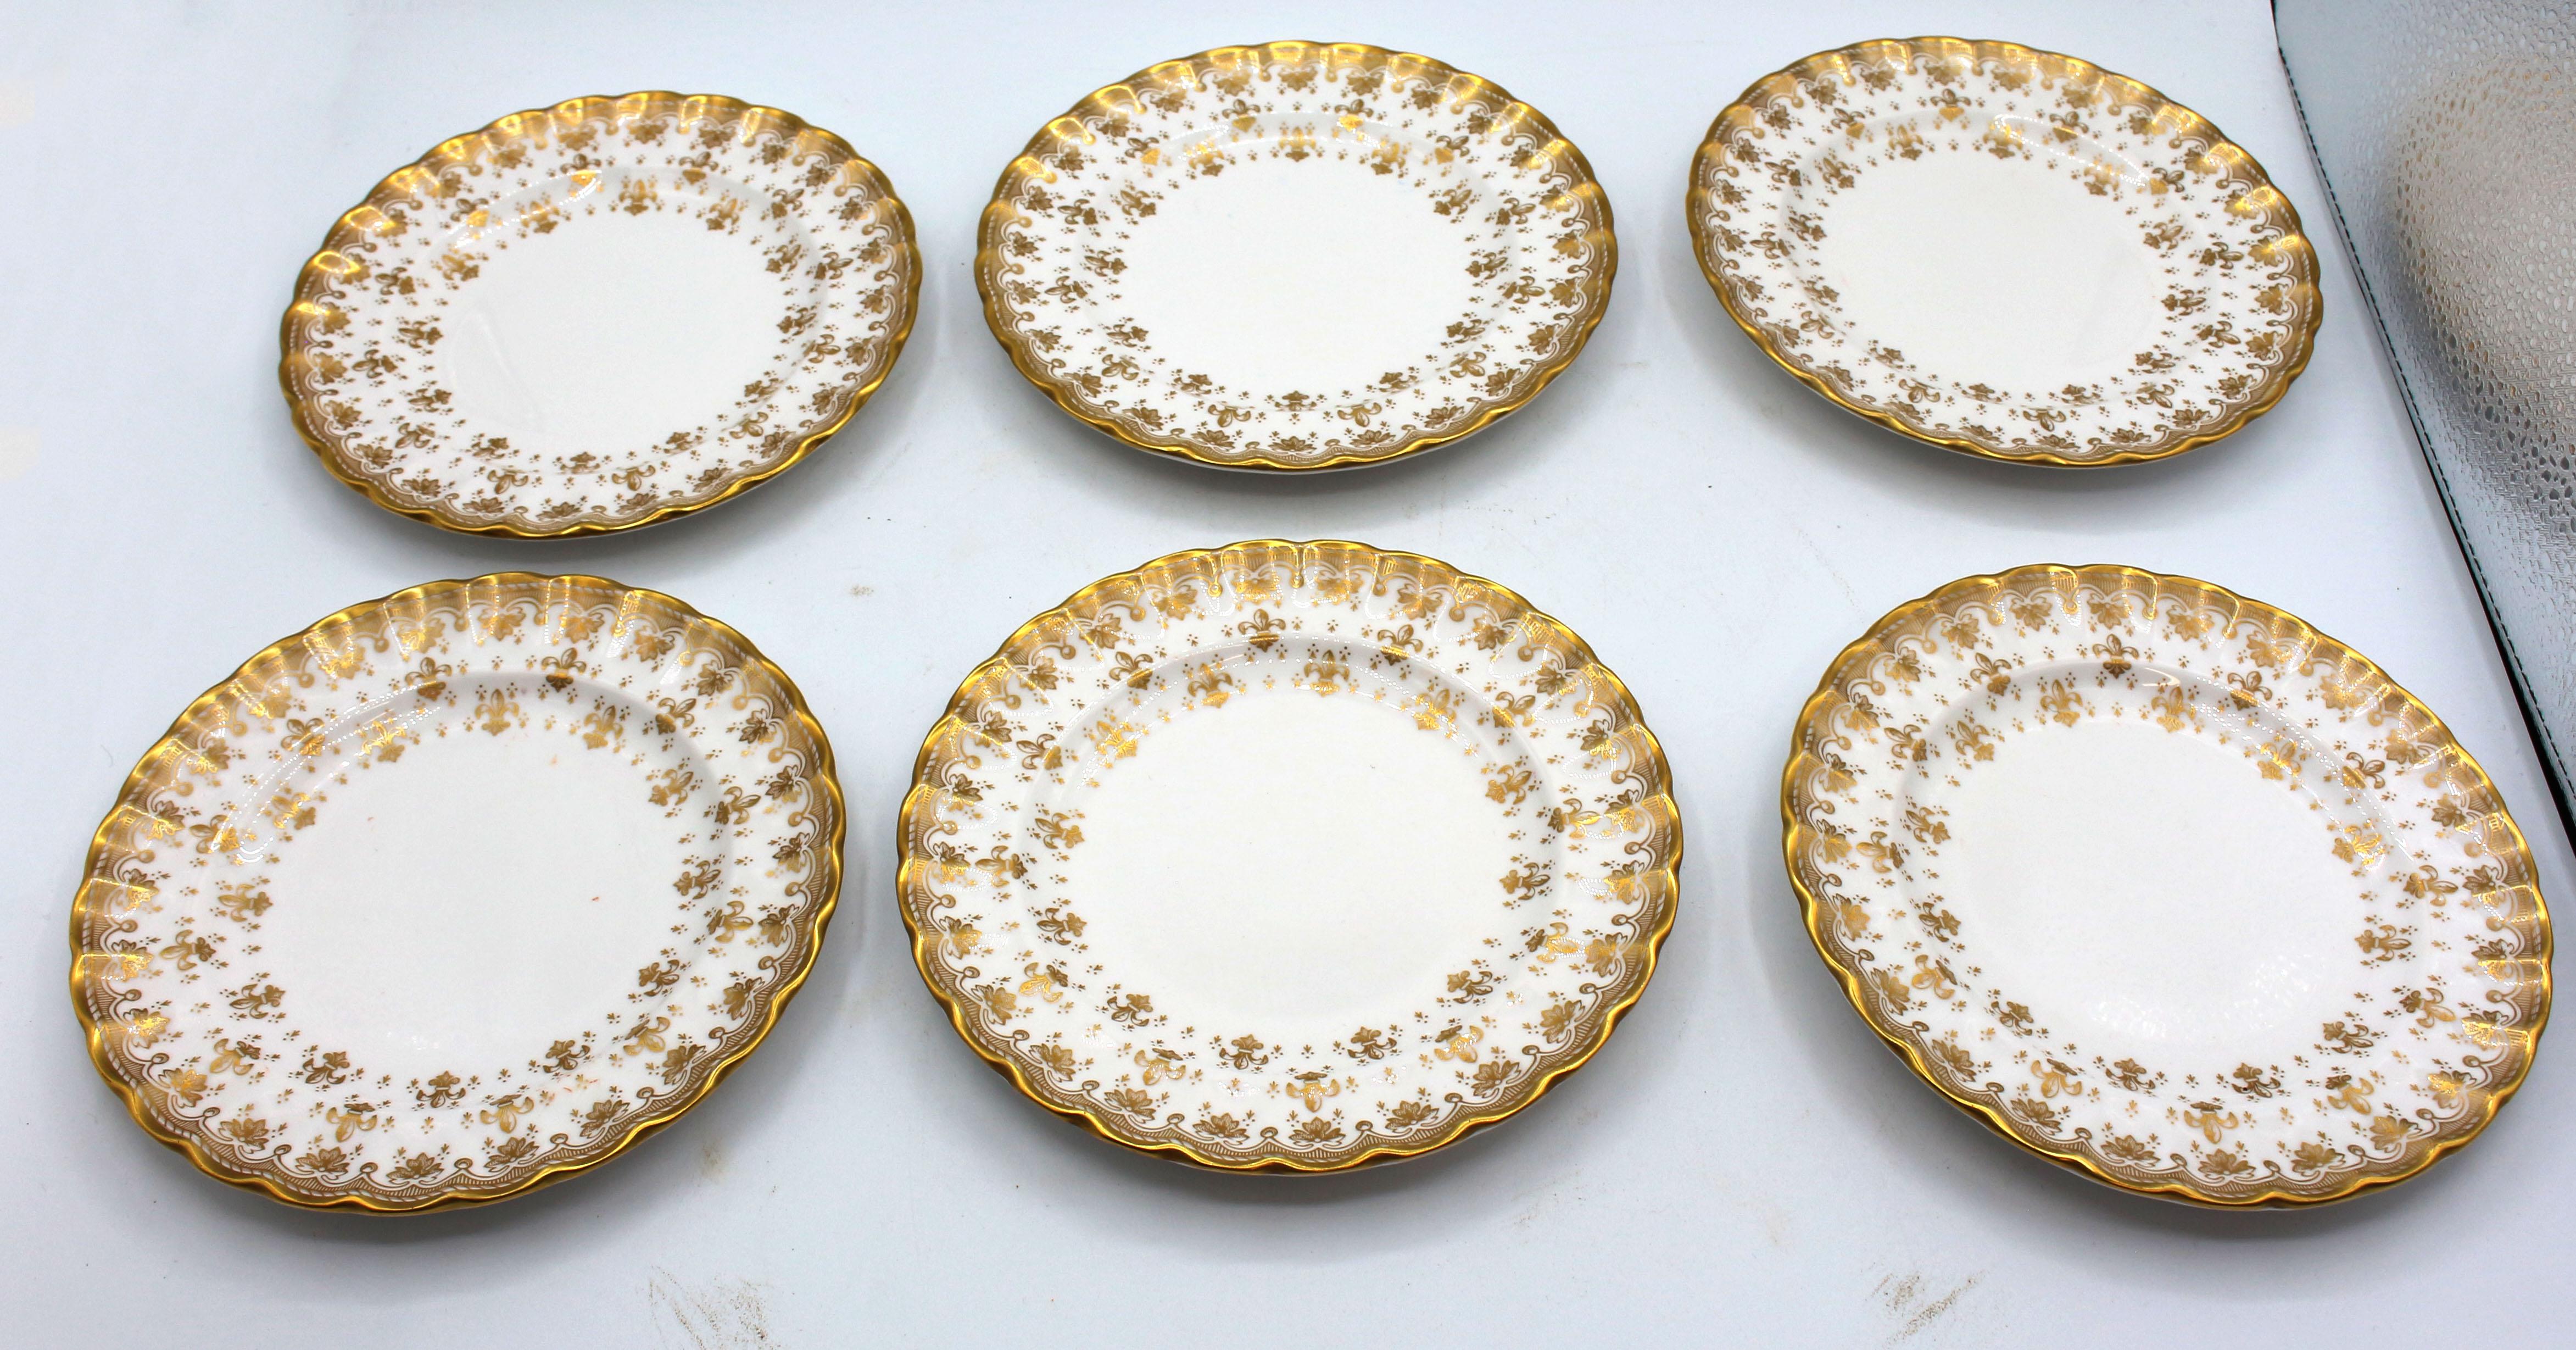 Set of 6 Bread & Butter Plates, Spode's Fleur de Lys Gold, Mid-20th century, bone china. Fine gilt decoration. Discontinued pattern. Fine condition.
6 1/2